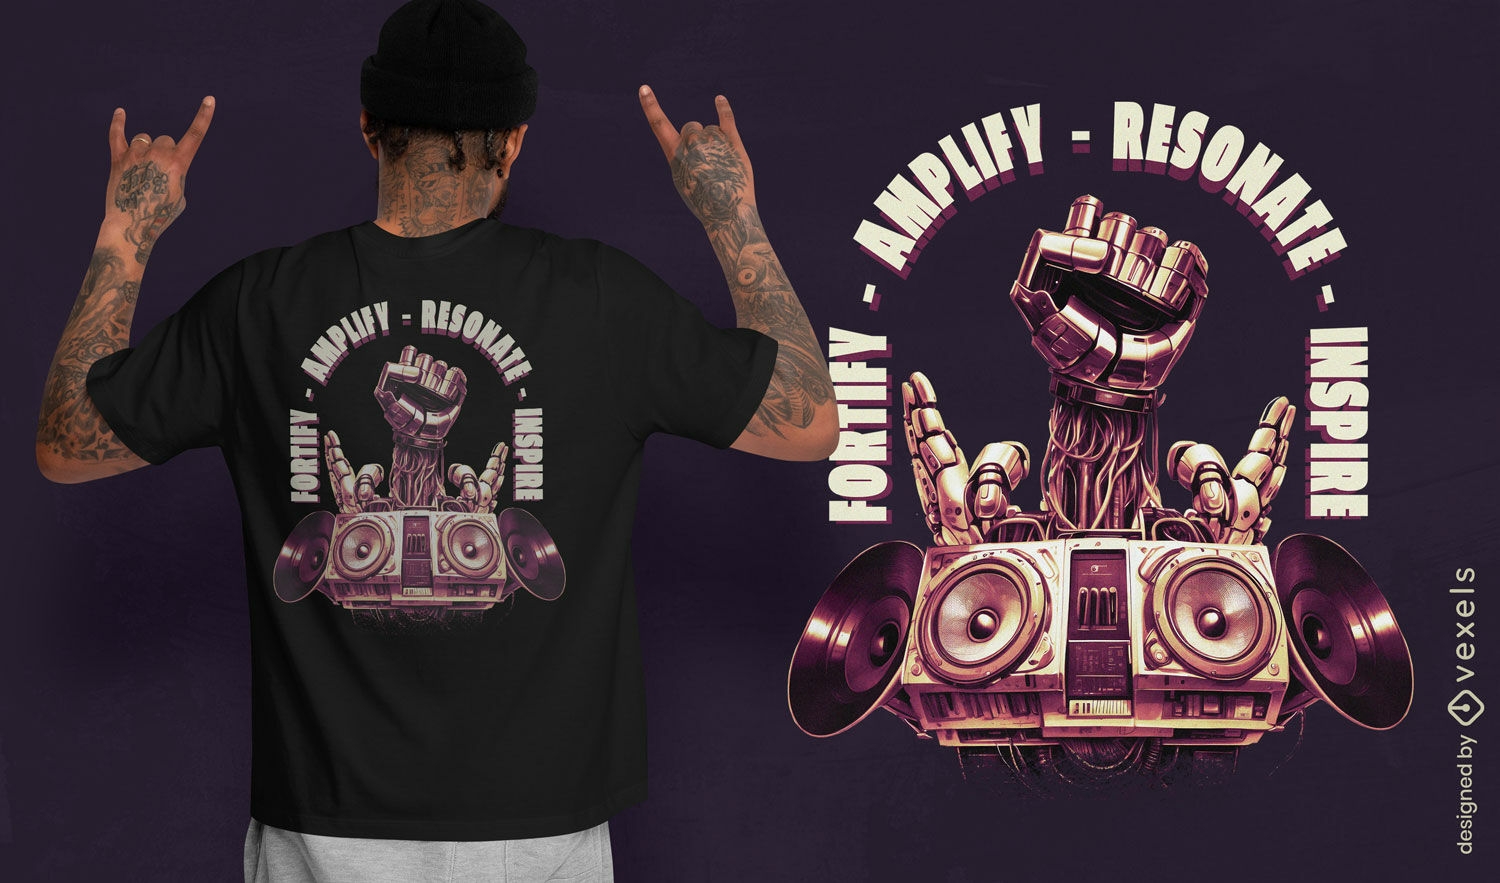 Amplify resonance music t-shirt design